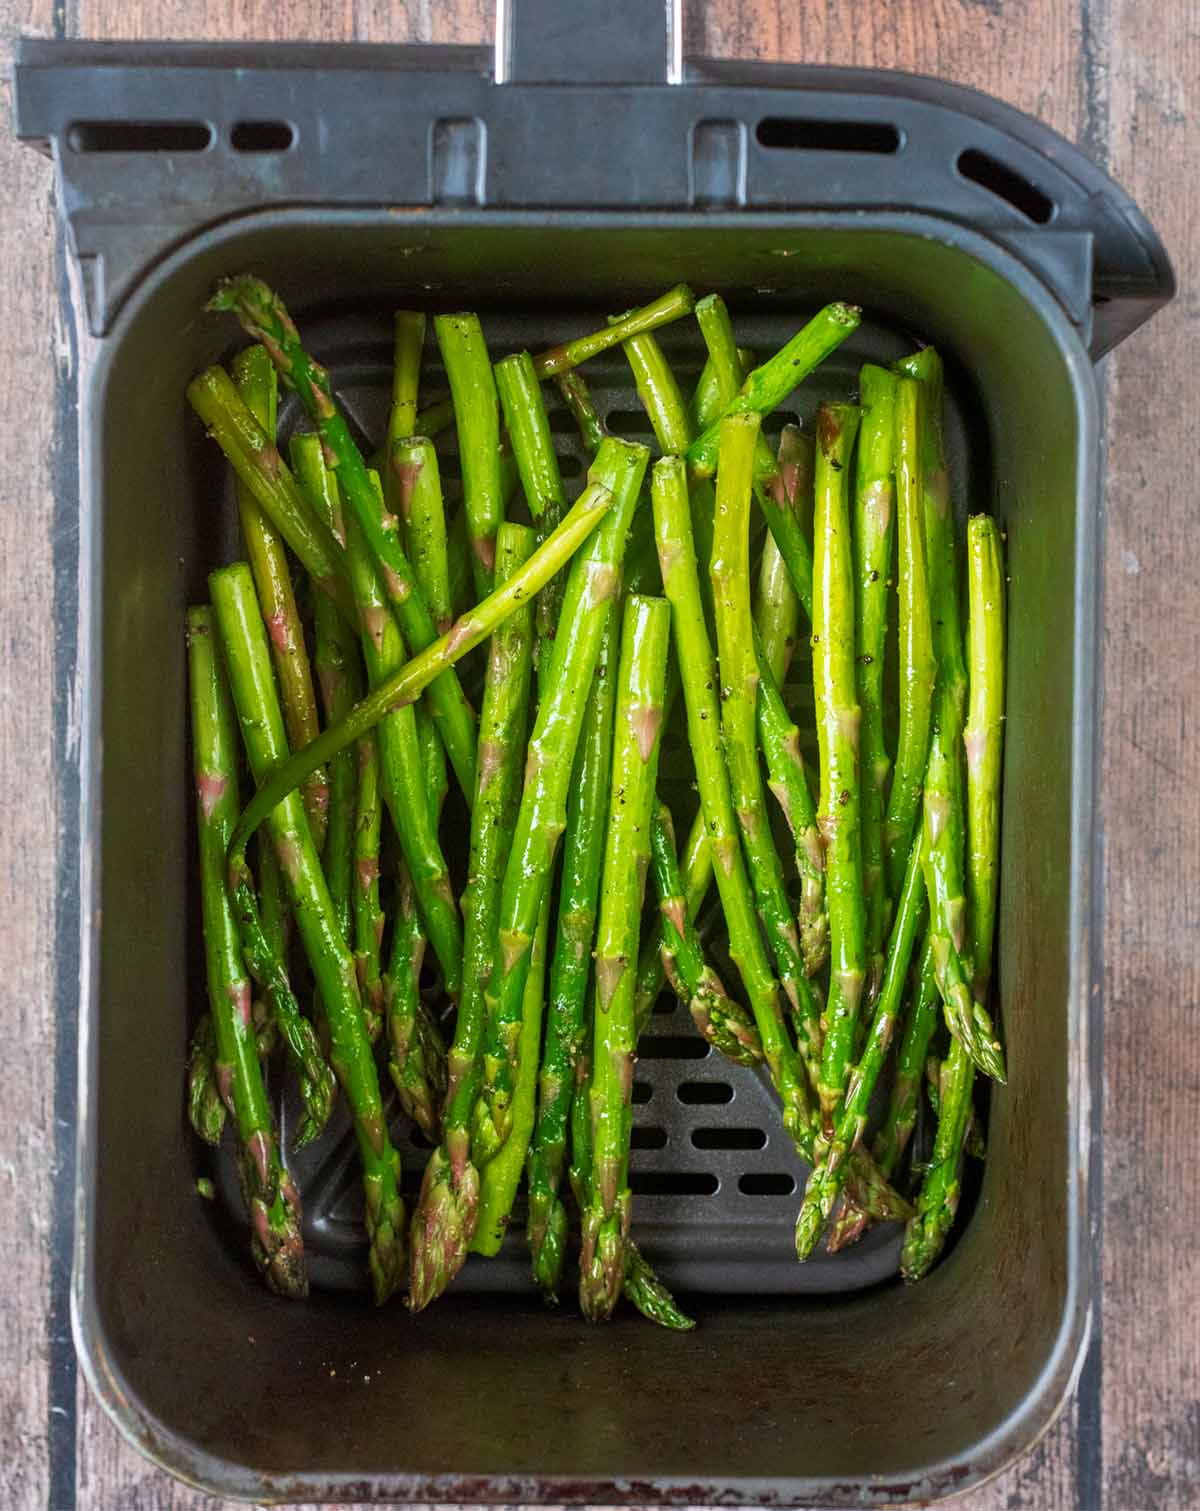 Coated asparagus in an air fryer basket.